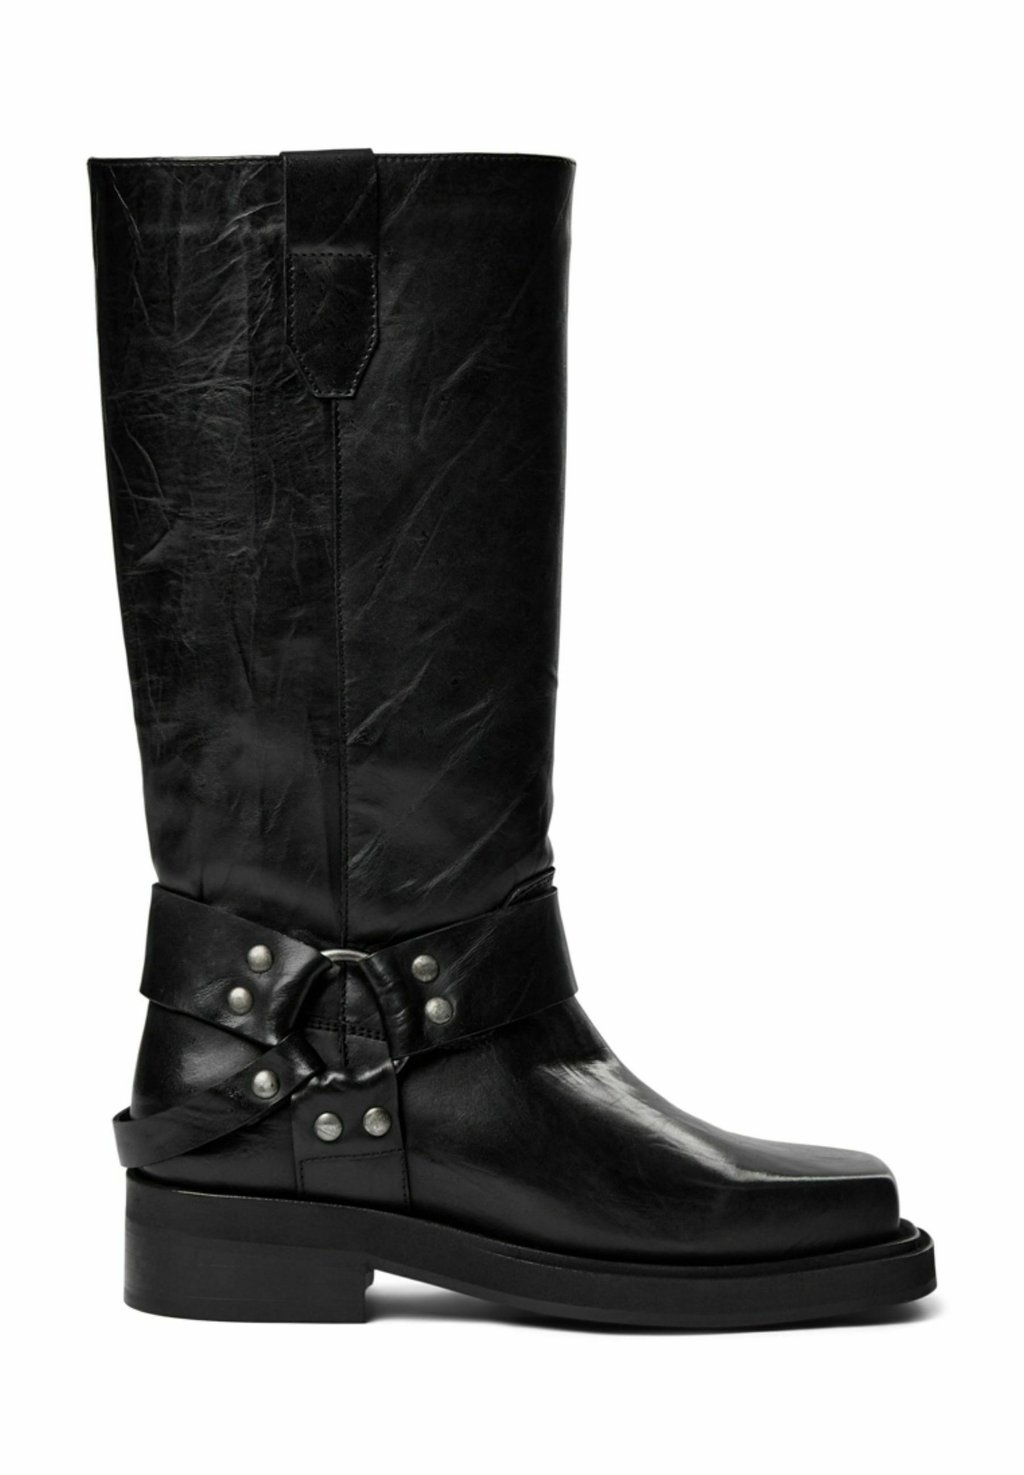 Техасские/байкерские ботинки Angelina Pavement, цвет black crinkle